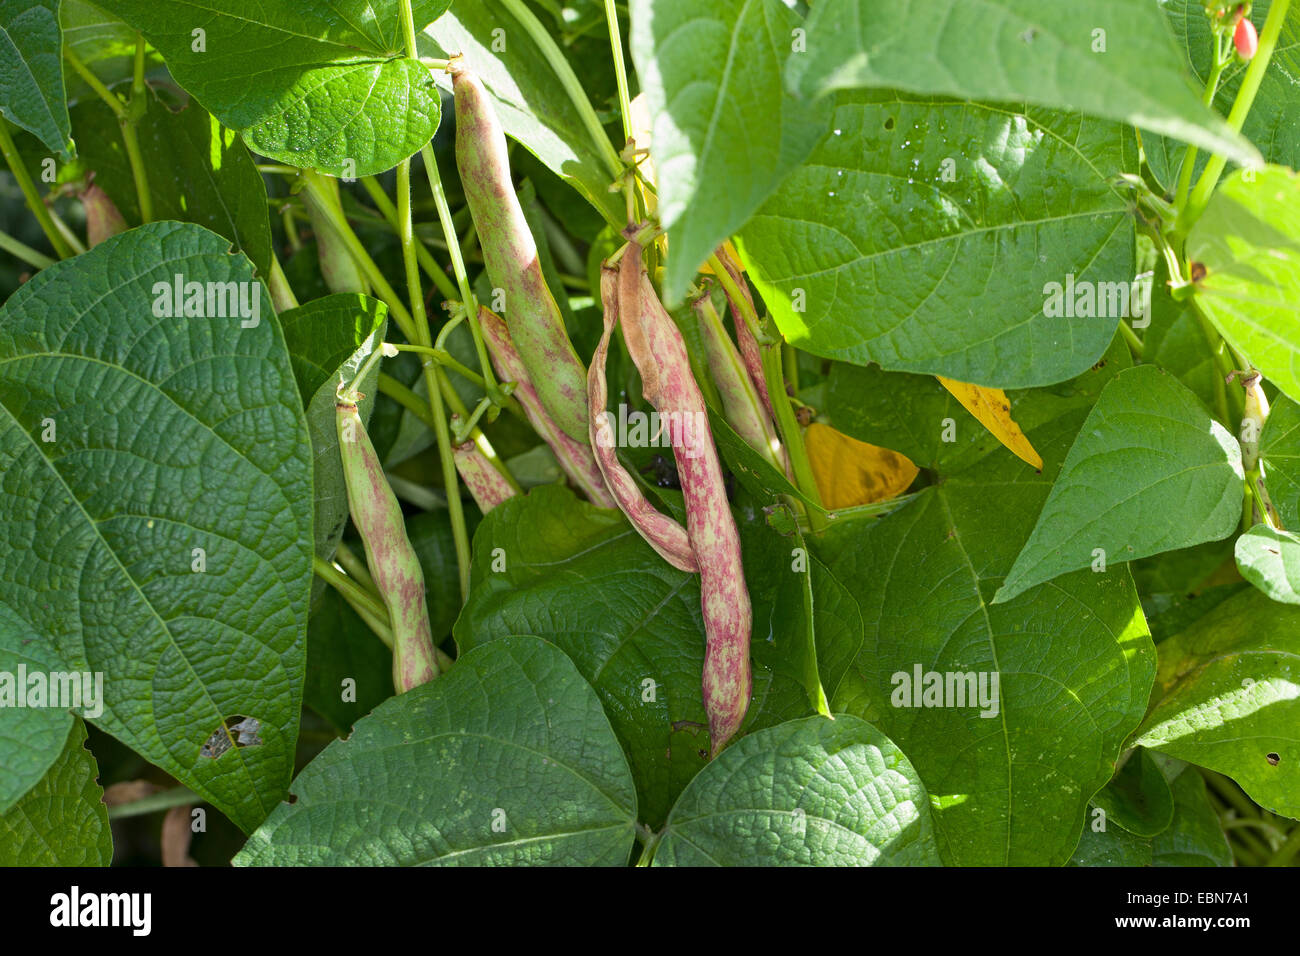 common bean (Phaseolus vulgaris), fresh beans at a plant Stock Photo